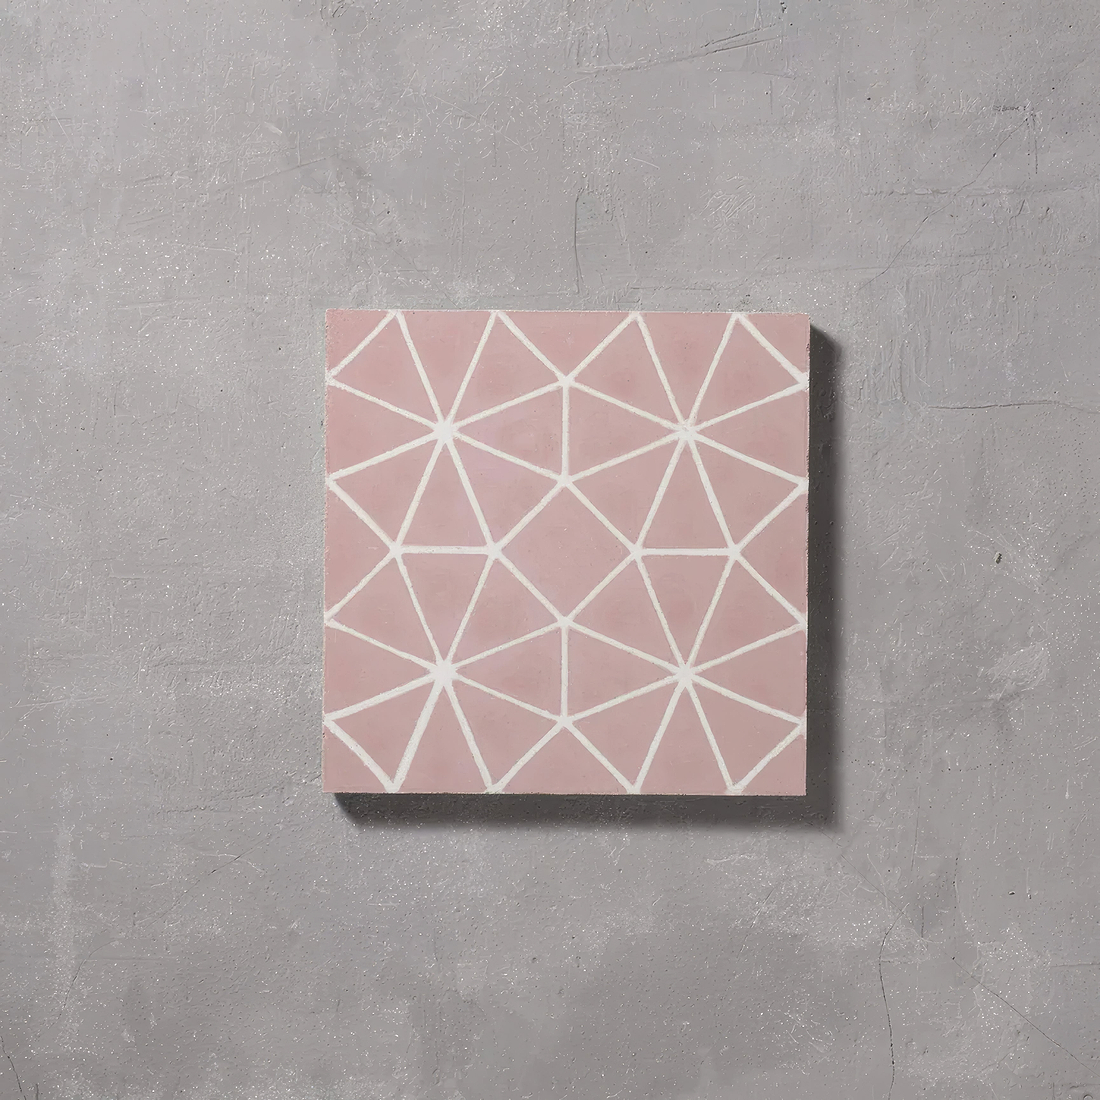 Anthropologie Pink Tile - Hyperion Tiles